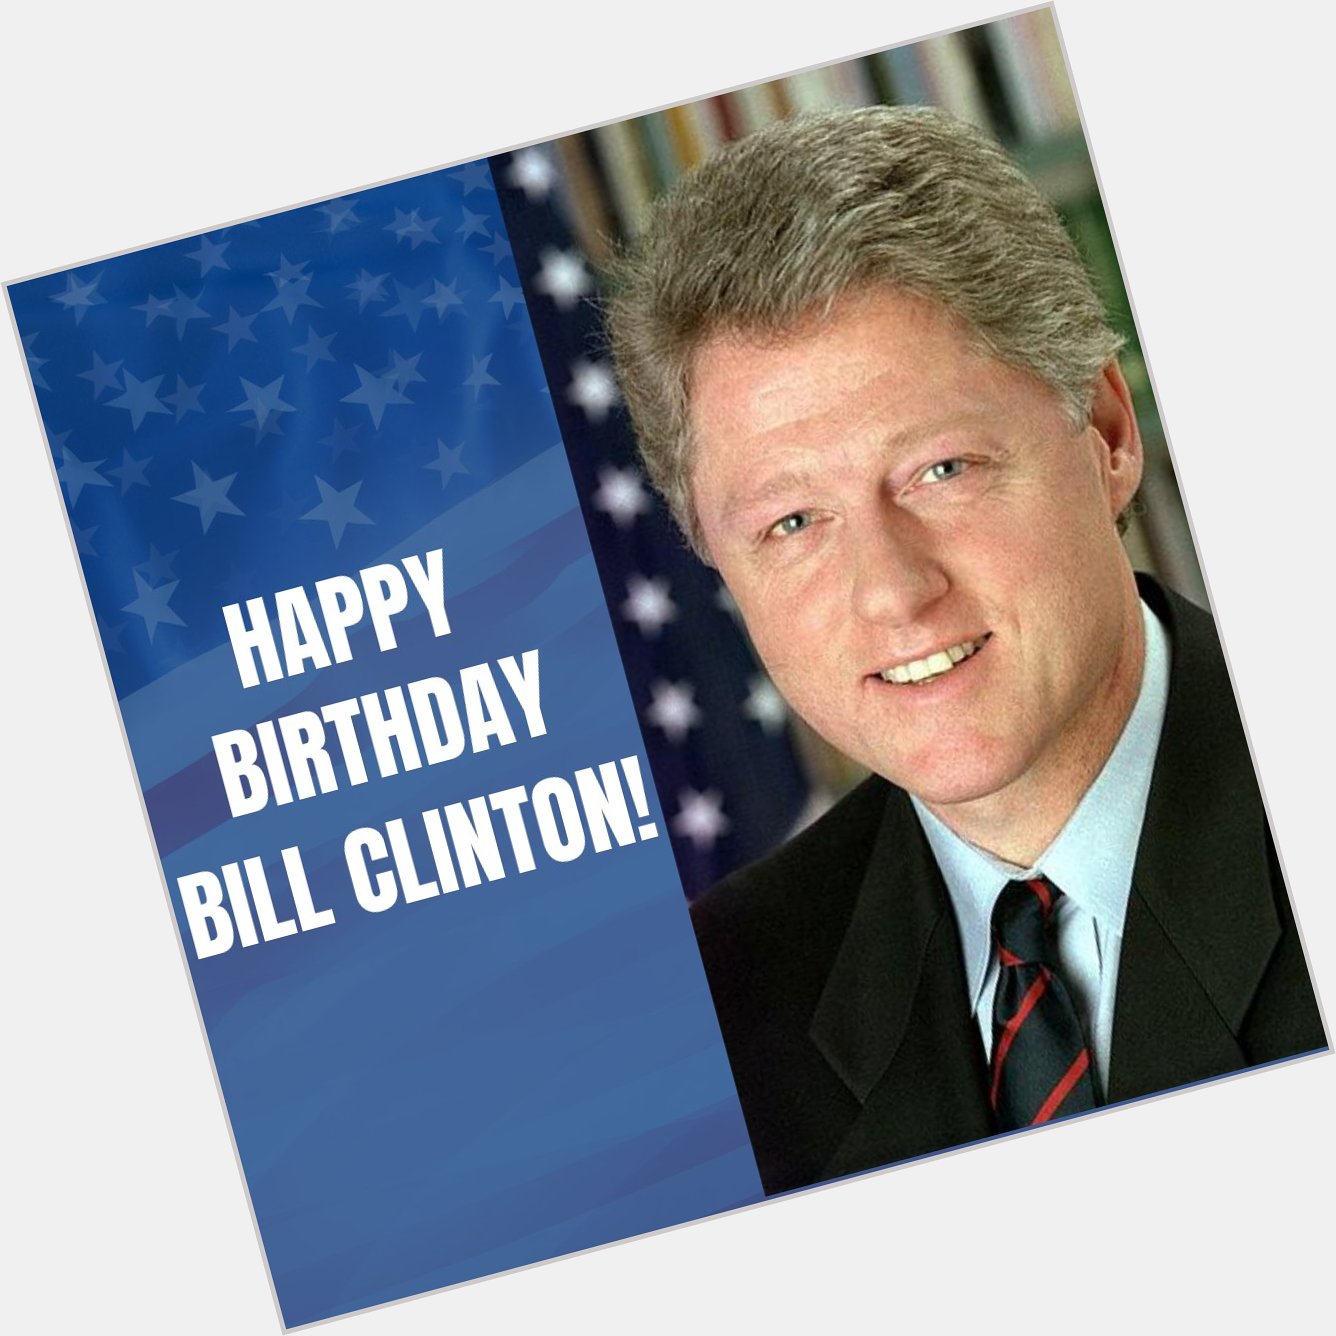  HAPPY BIRTHDAY! Bill Clinton turns 74 today. 